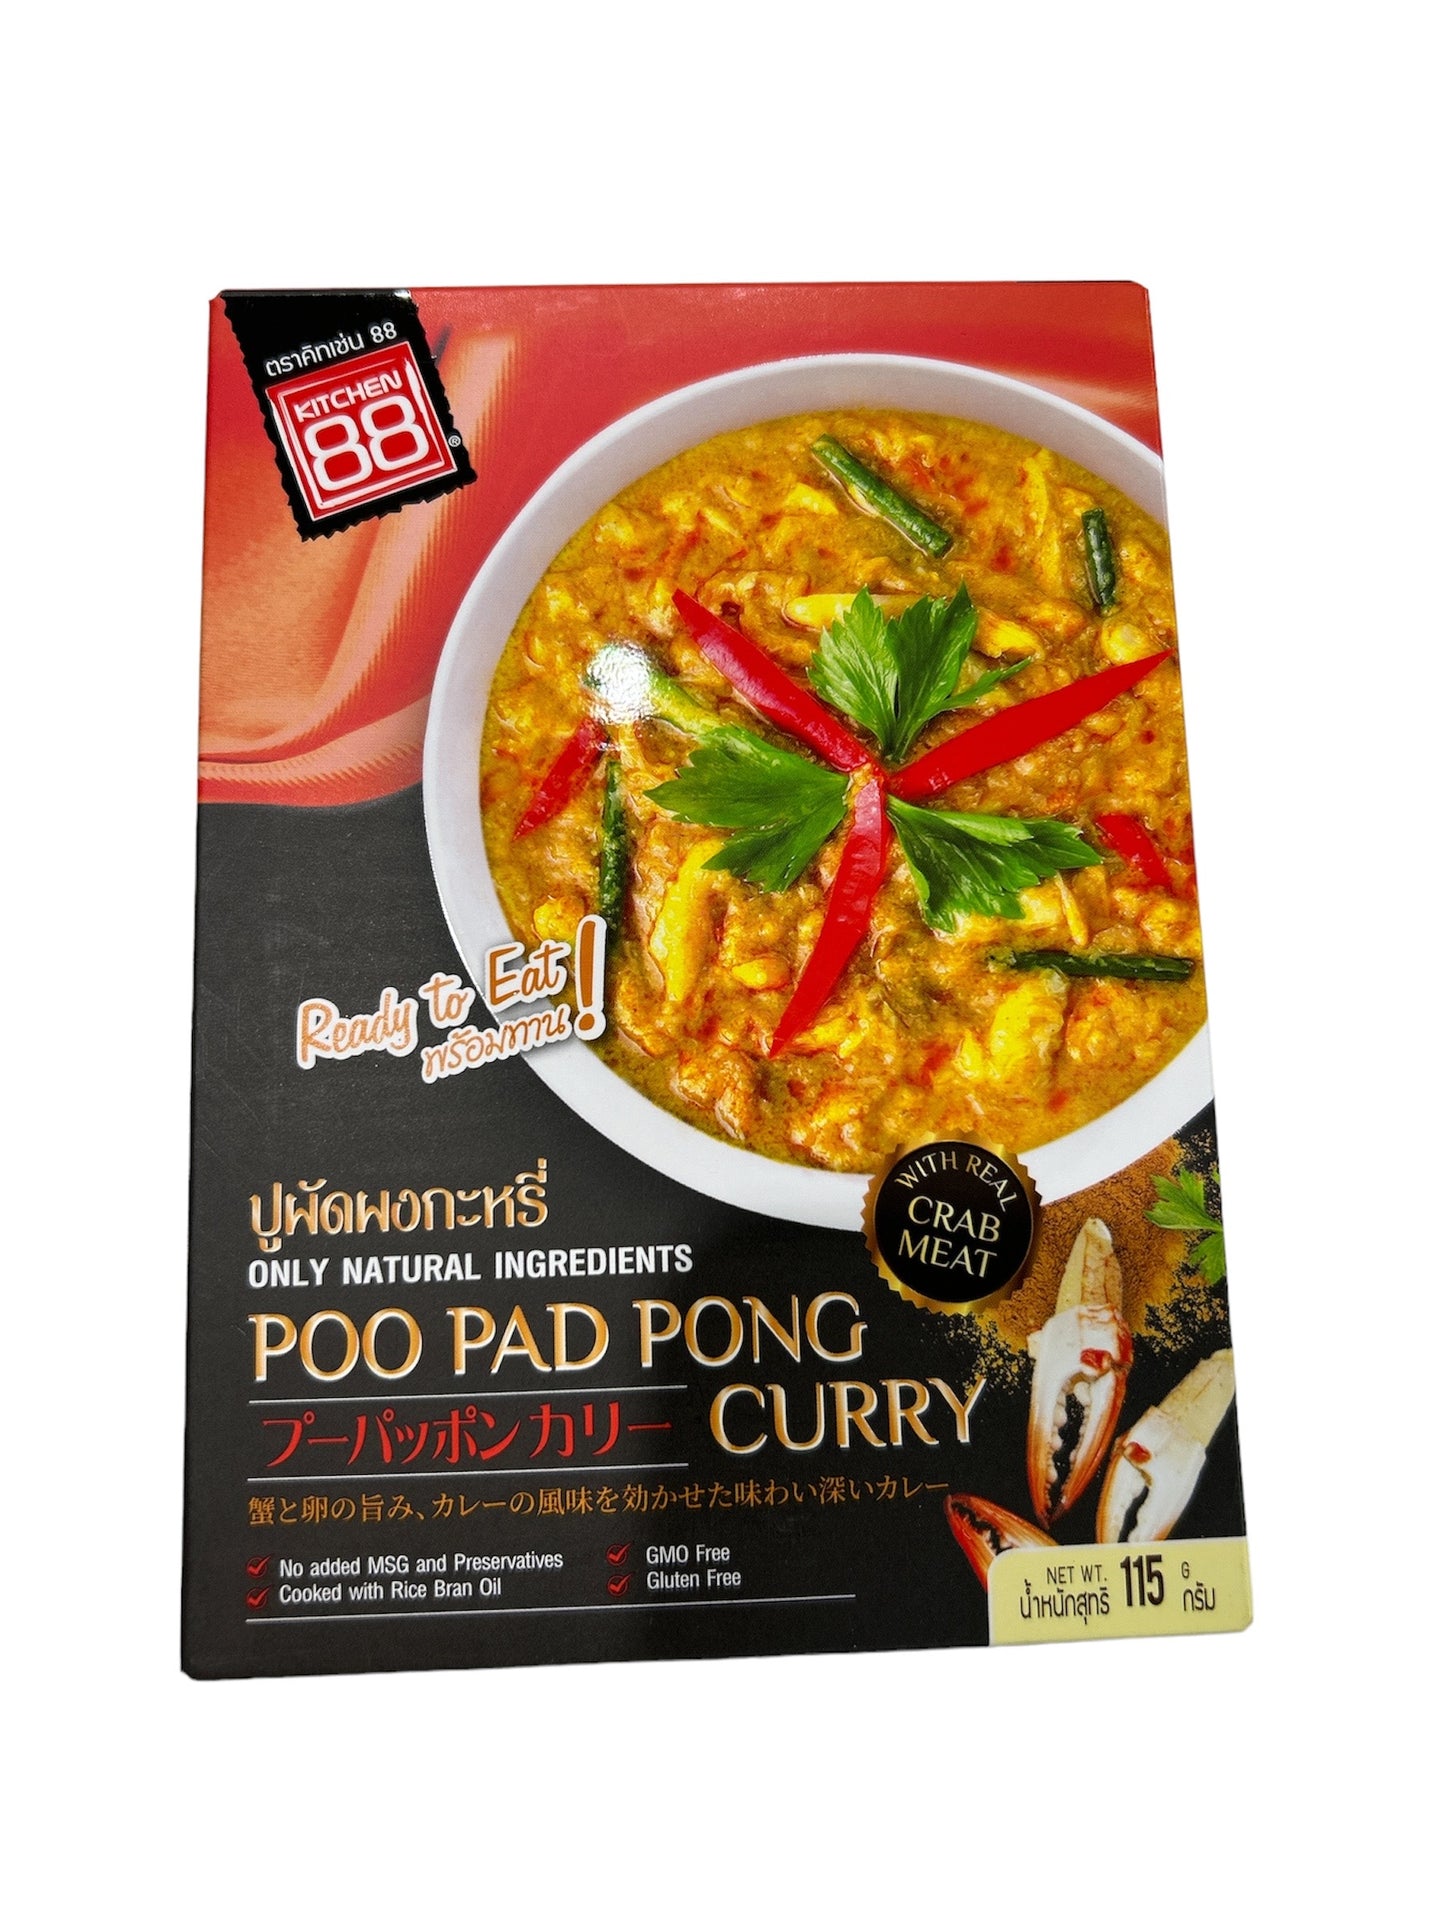 Kitchen88 プーパッポンカリー 115g Poo Pad Pong Curry